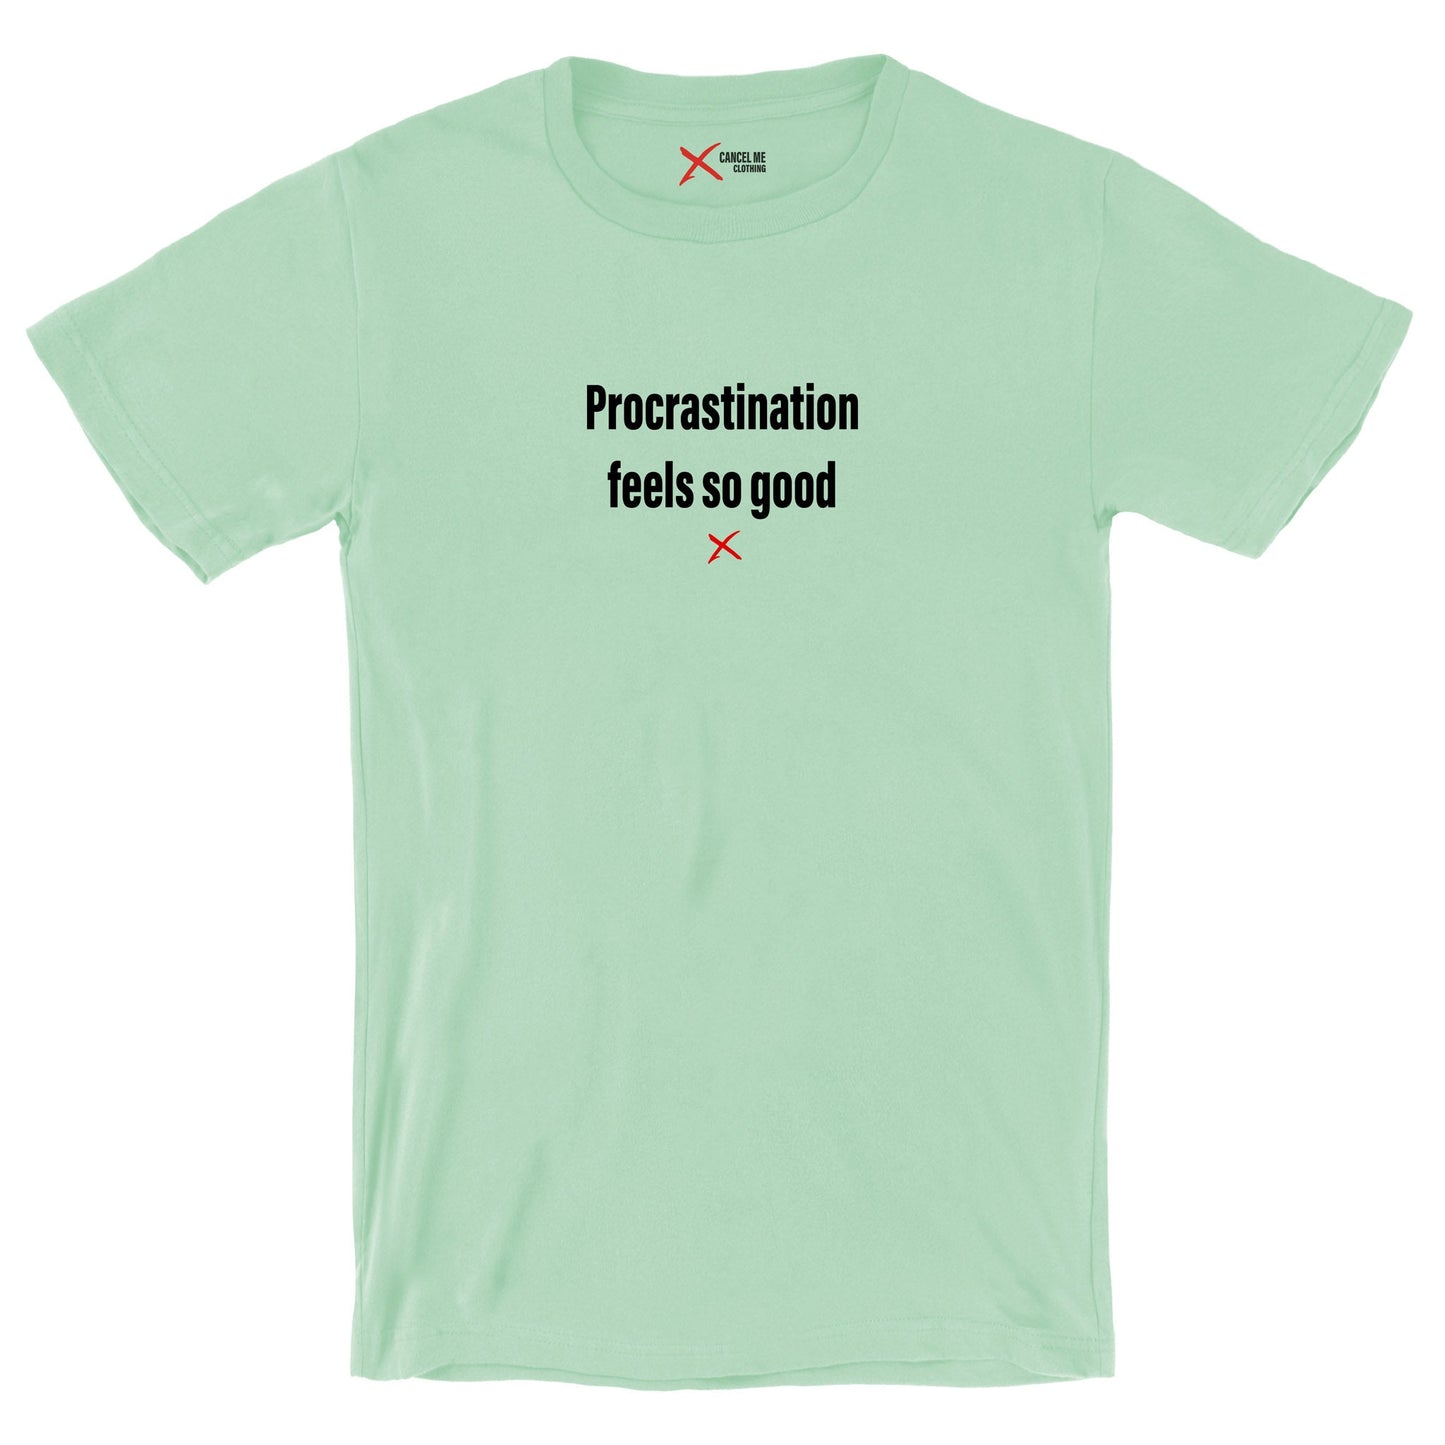 Procrastination feels so good - Shirt